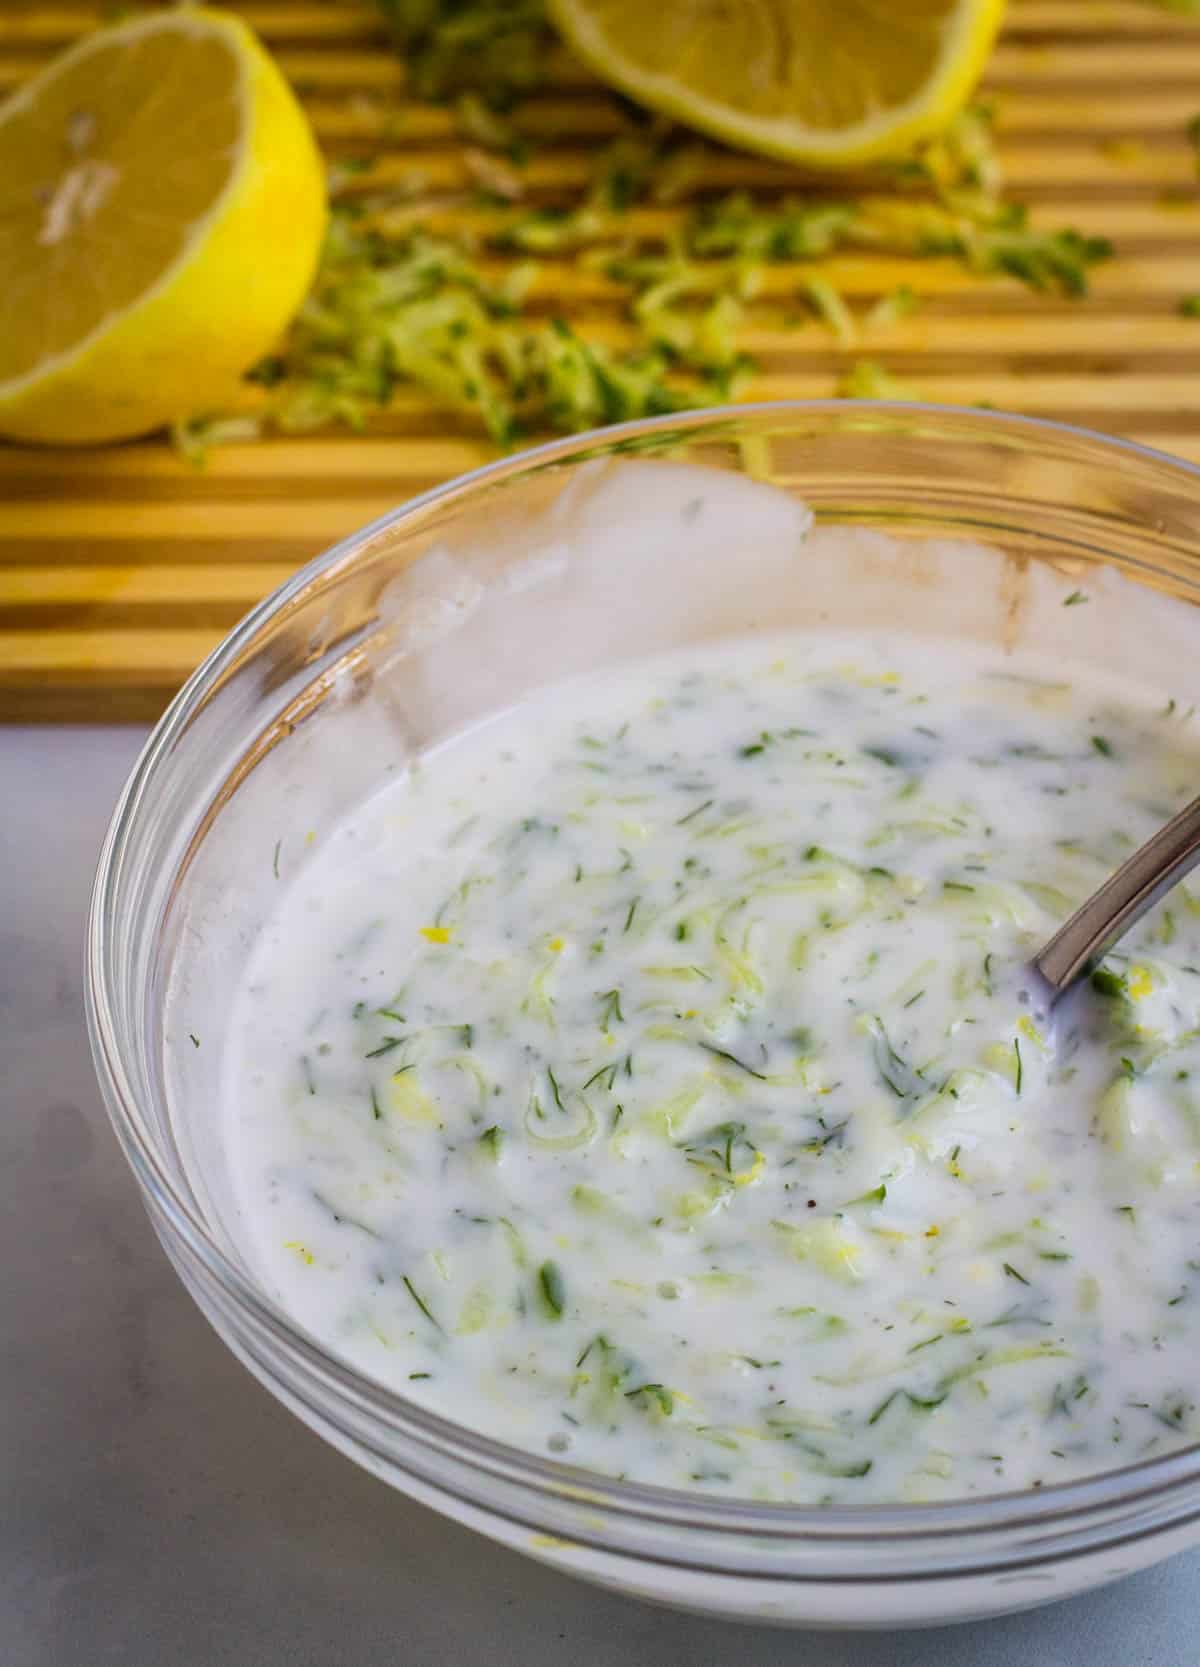 Cucumber yogurt sauce in glass bowl.